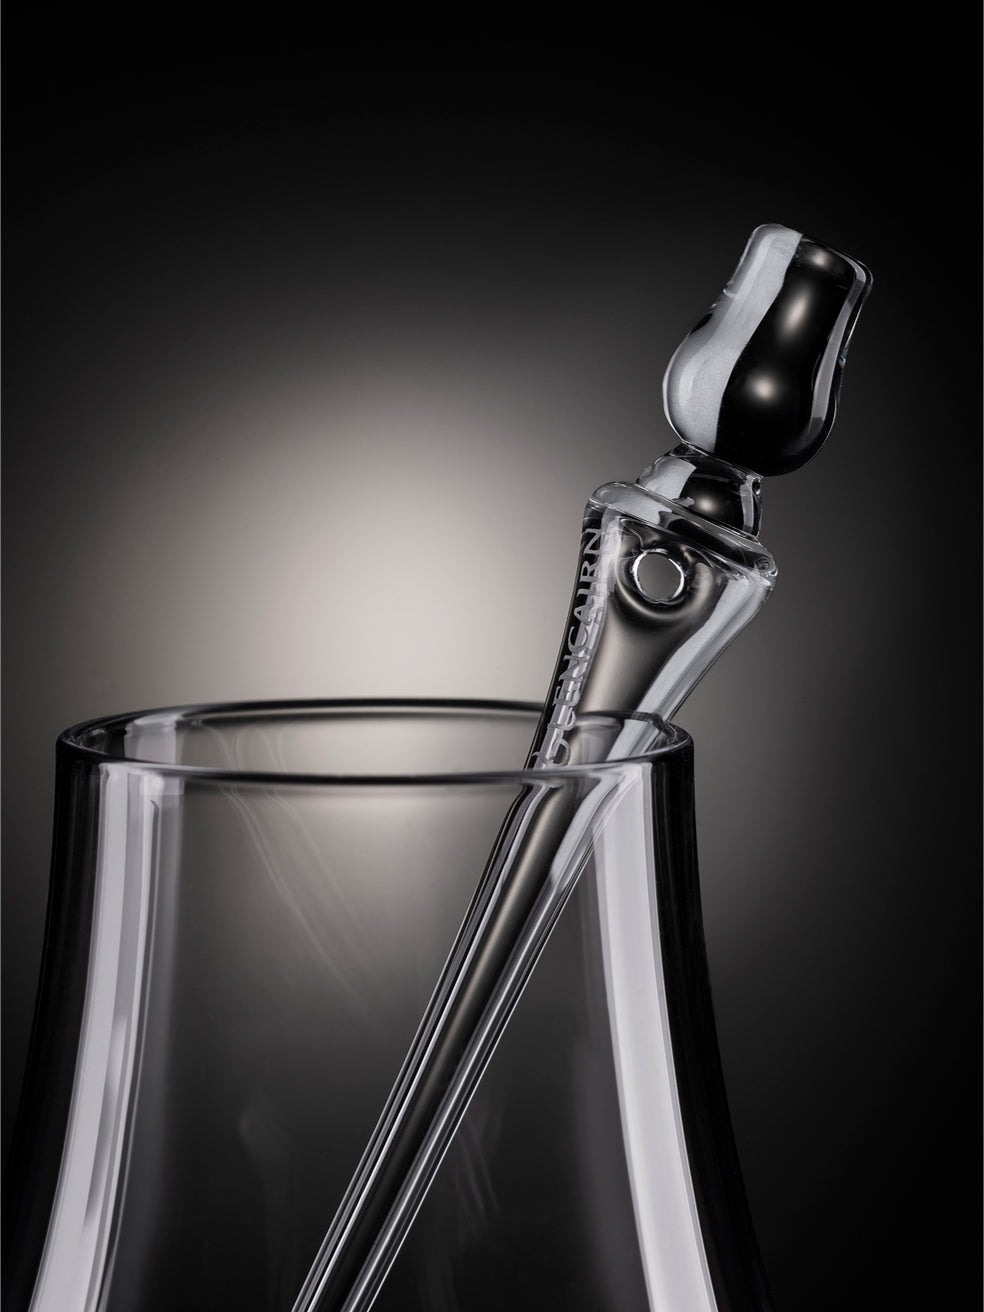 Handblown glass pipette for whisky by Glencairn